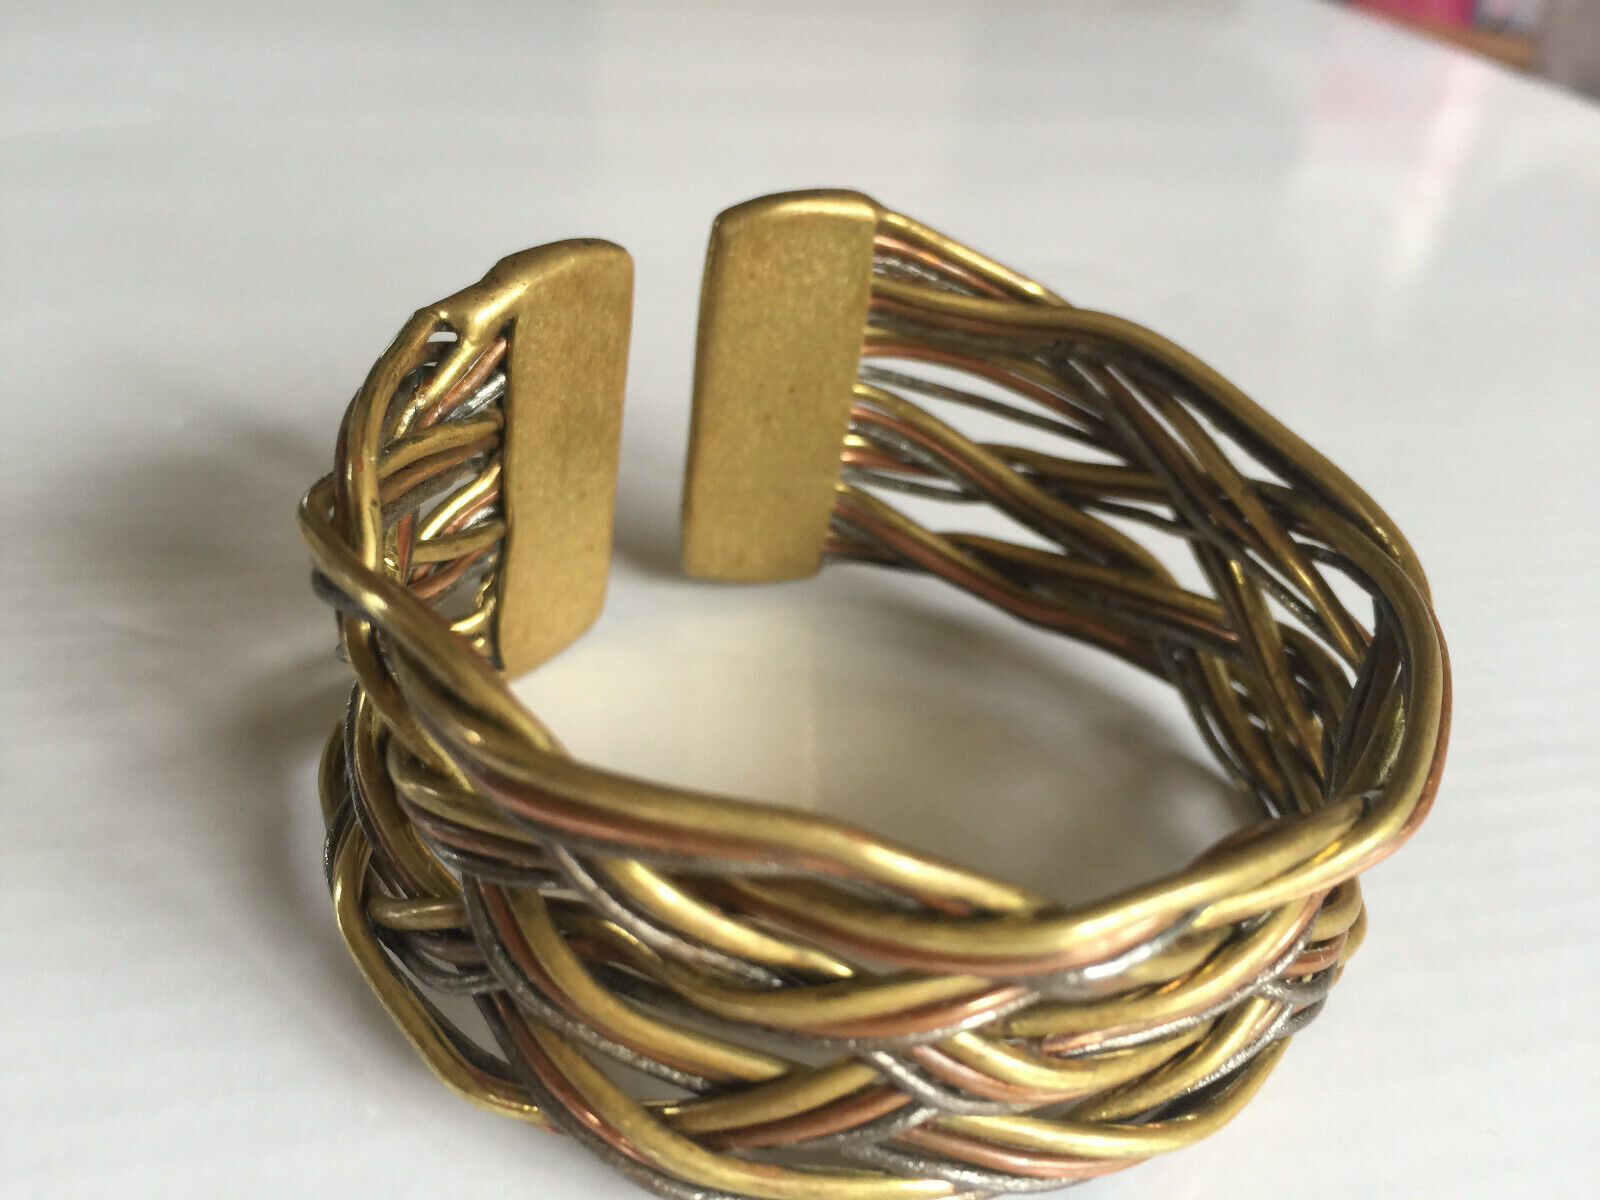 Vintage / Antique metallic wide gold tone Reticulated metal bracelet / Bangle